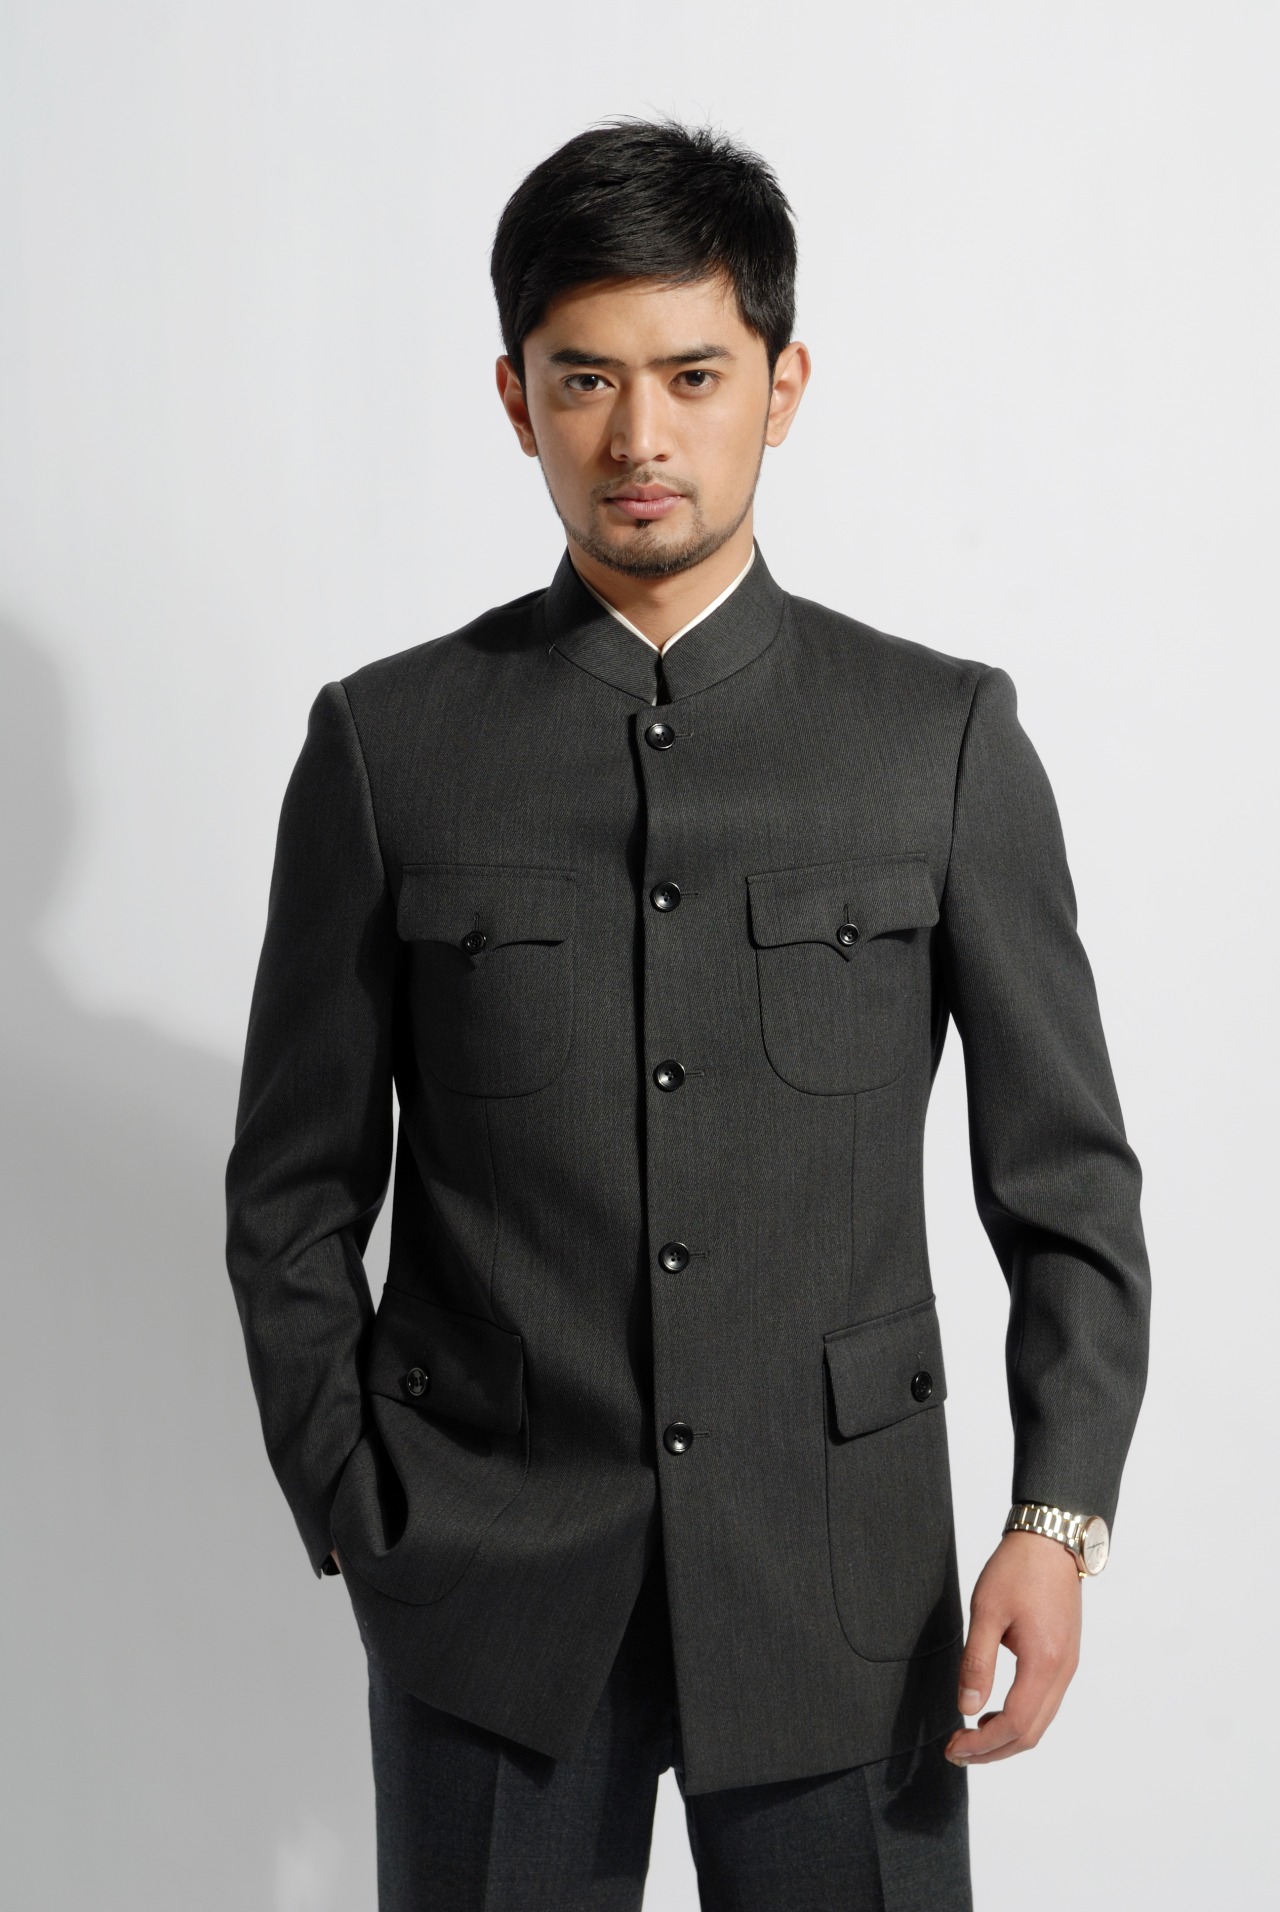 Traditional Zhongshan Suit | eduaspirant.com